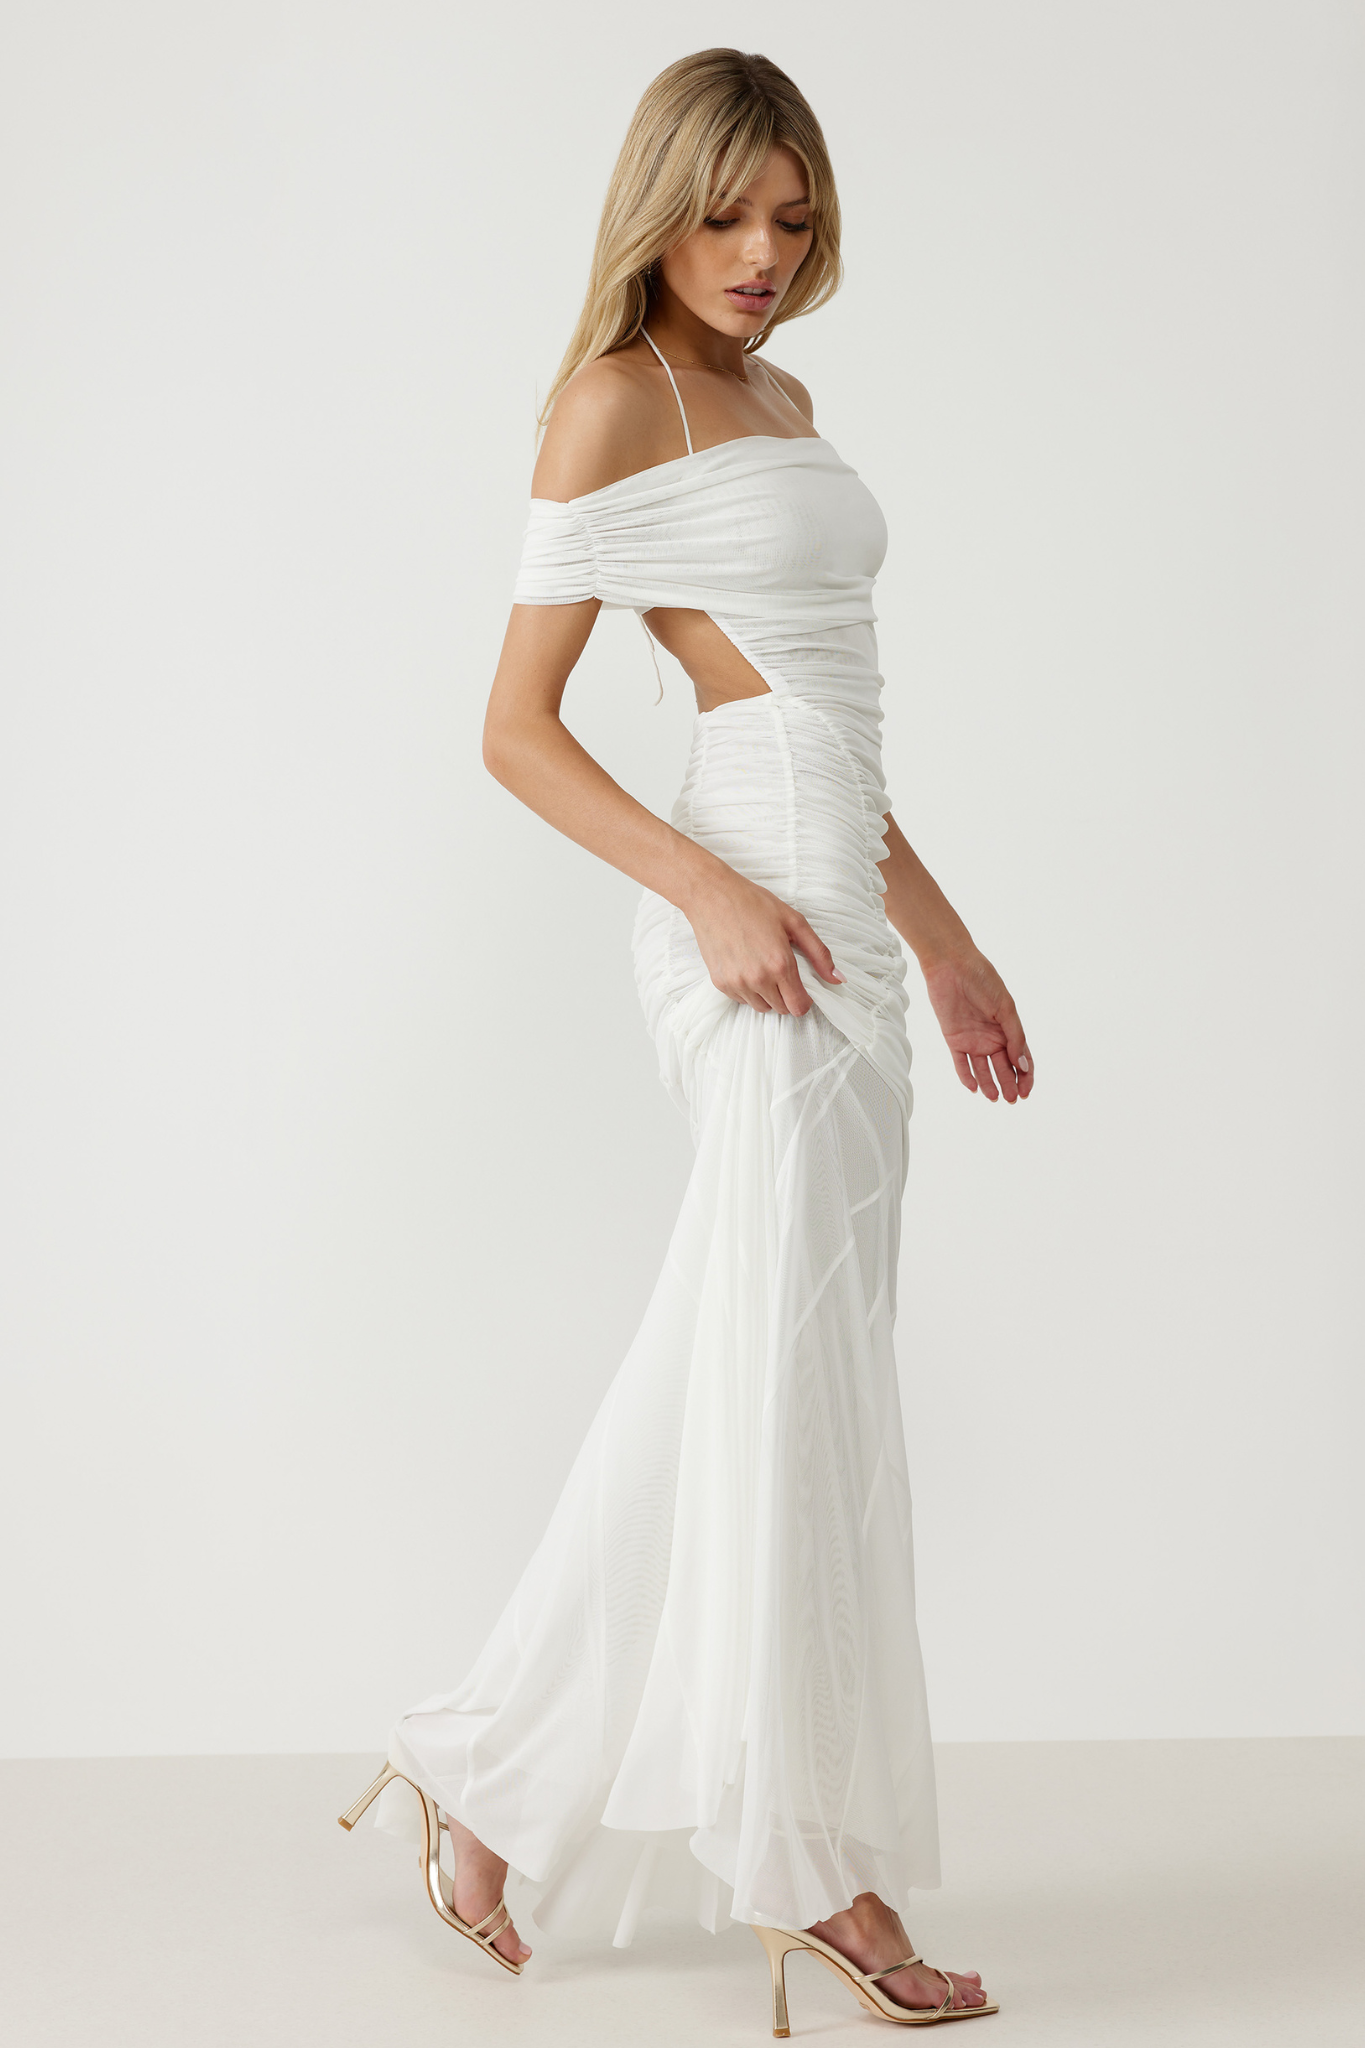 Xena Dress in White by Lexi - RENTAL